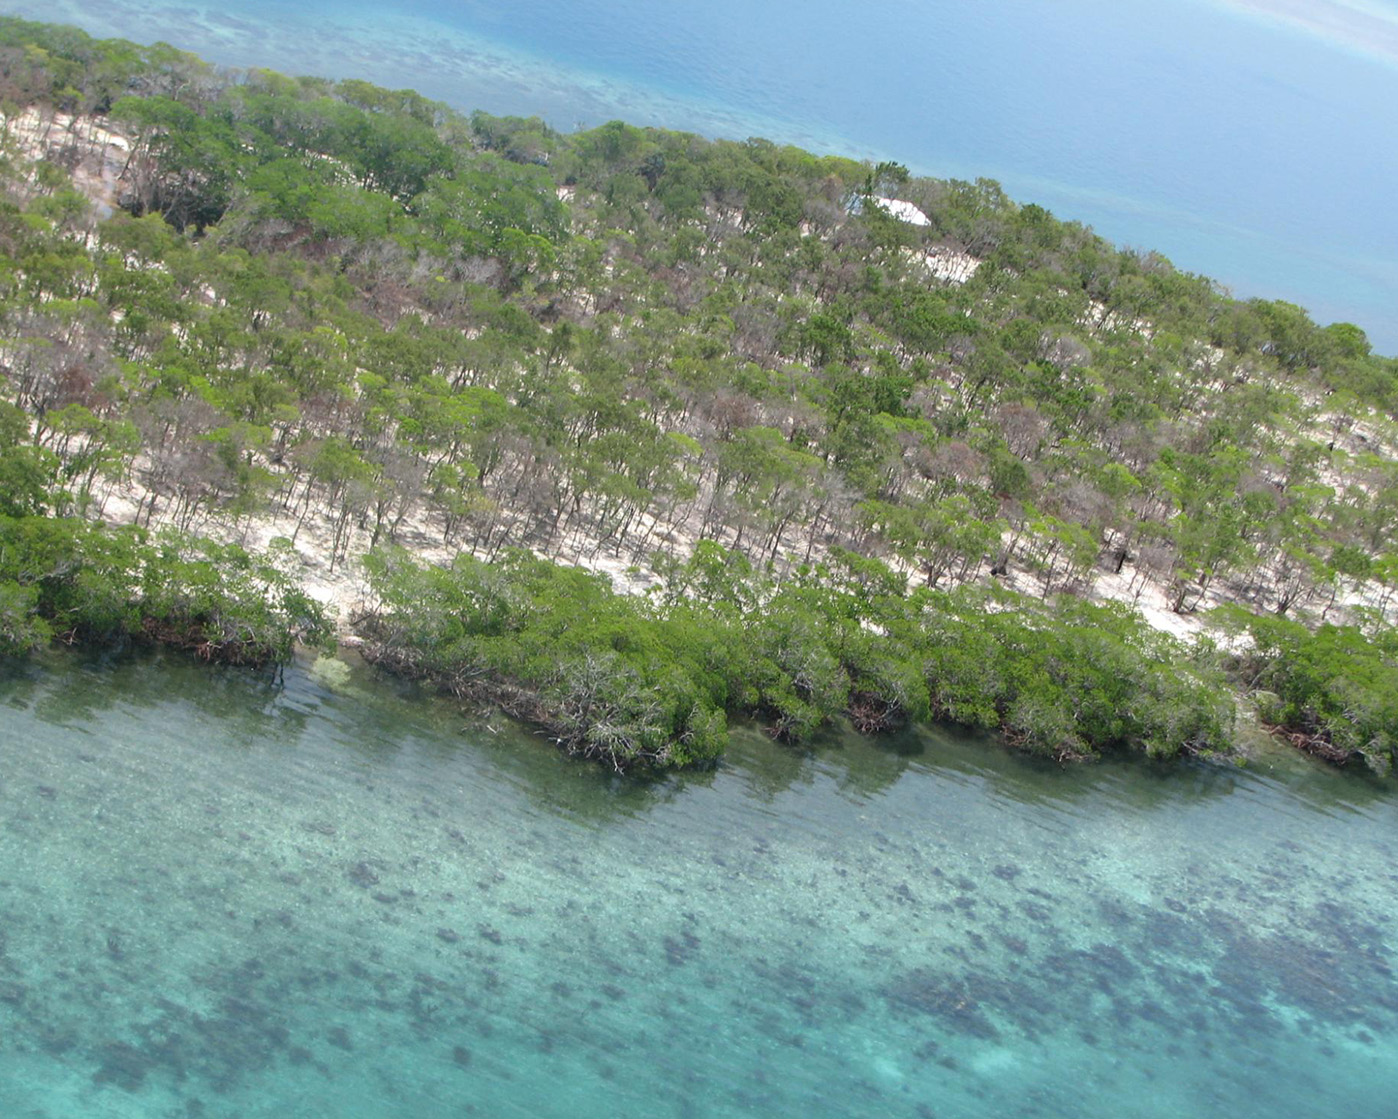 Image of ocean sand beach property for sale in belmopan area, Belize.